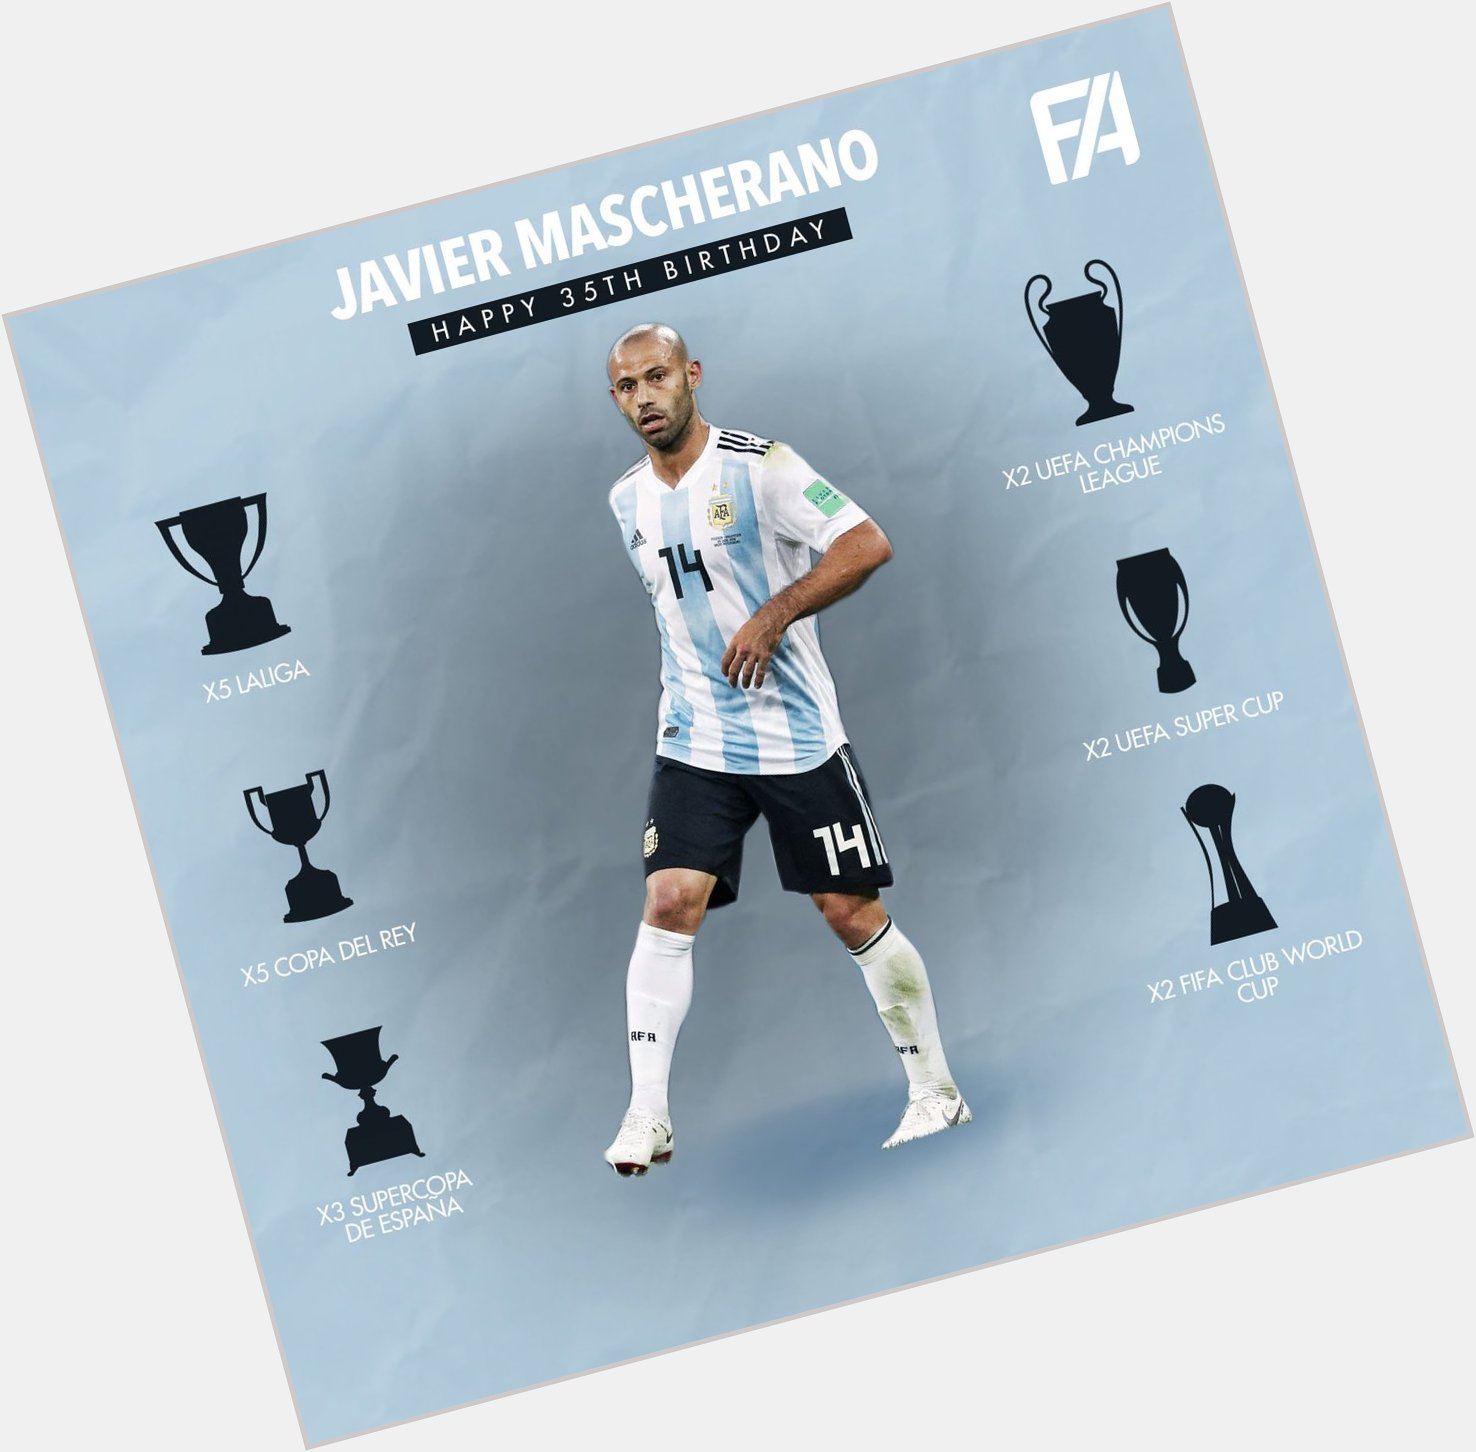 Happy 35th birthday, Javier Mascherano! 

What a career 